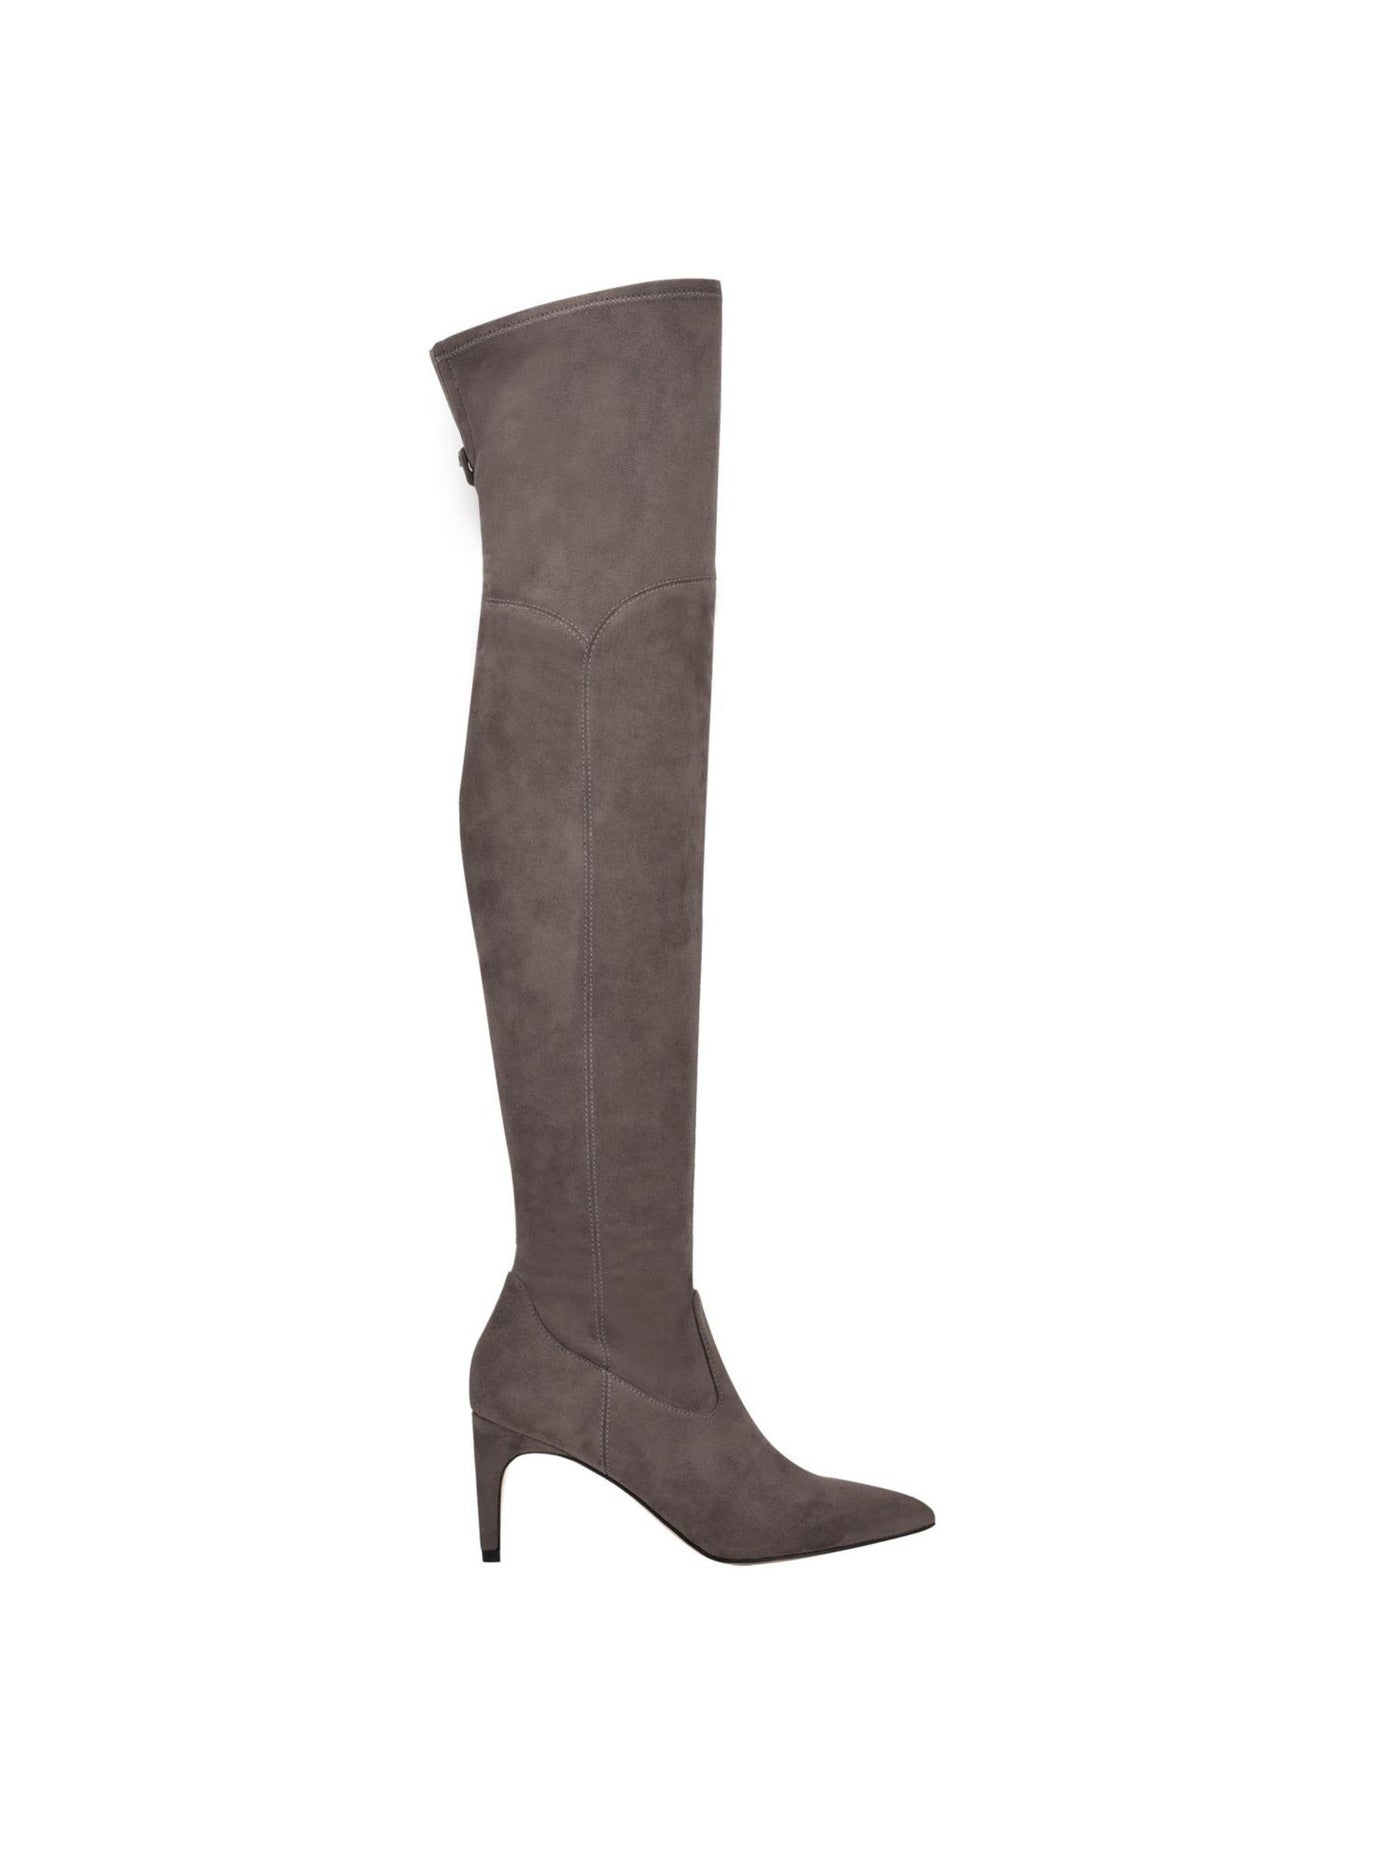 CALVIN KLEIN Womens Gray Goring Sacha Pointy Toe Stiletto Zip-Up Heeled Boots 8 M